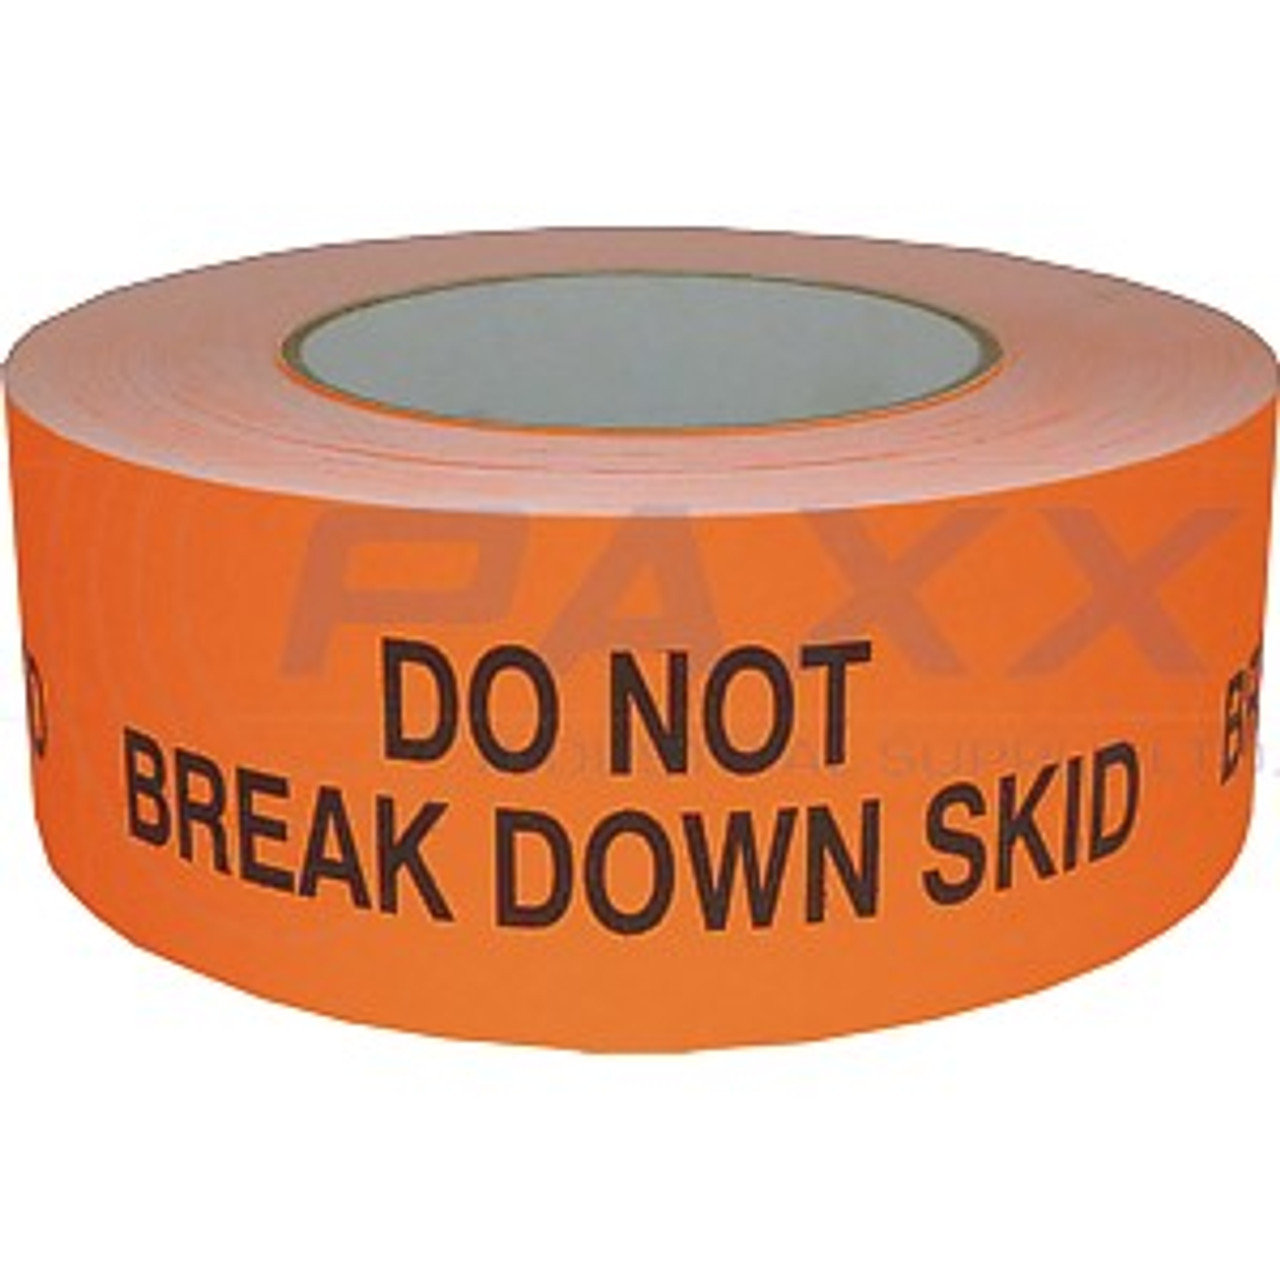 DO NOT BREAK DOWN SKID Label 2" x 5"